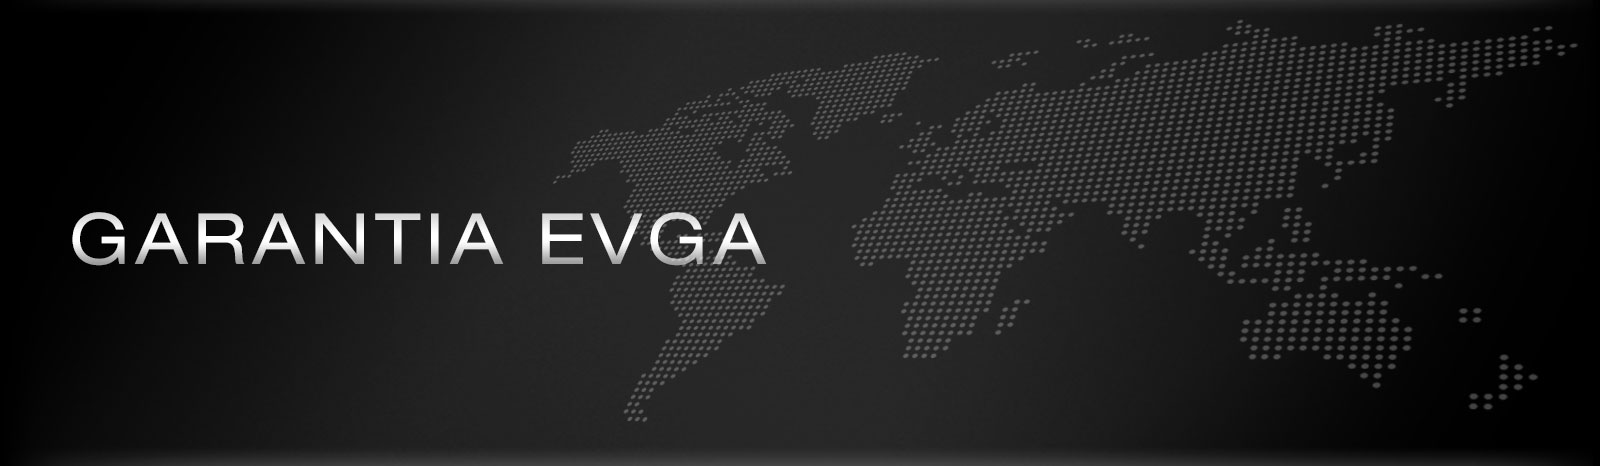 EVGA Warranty